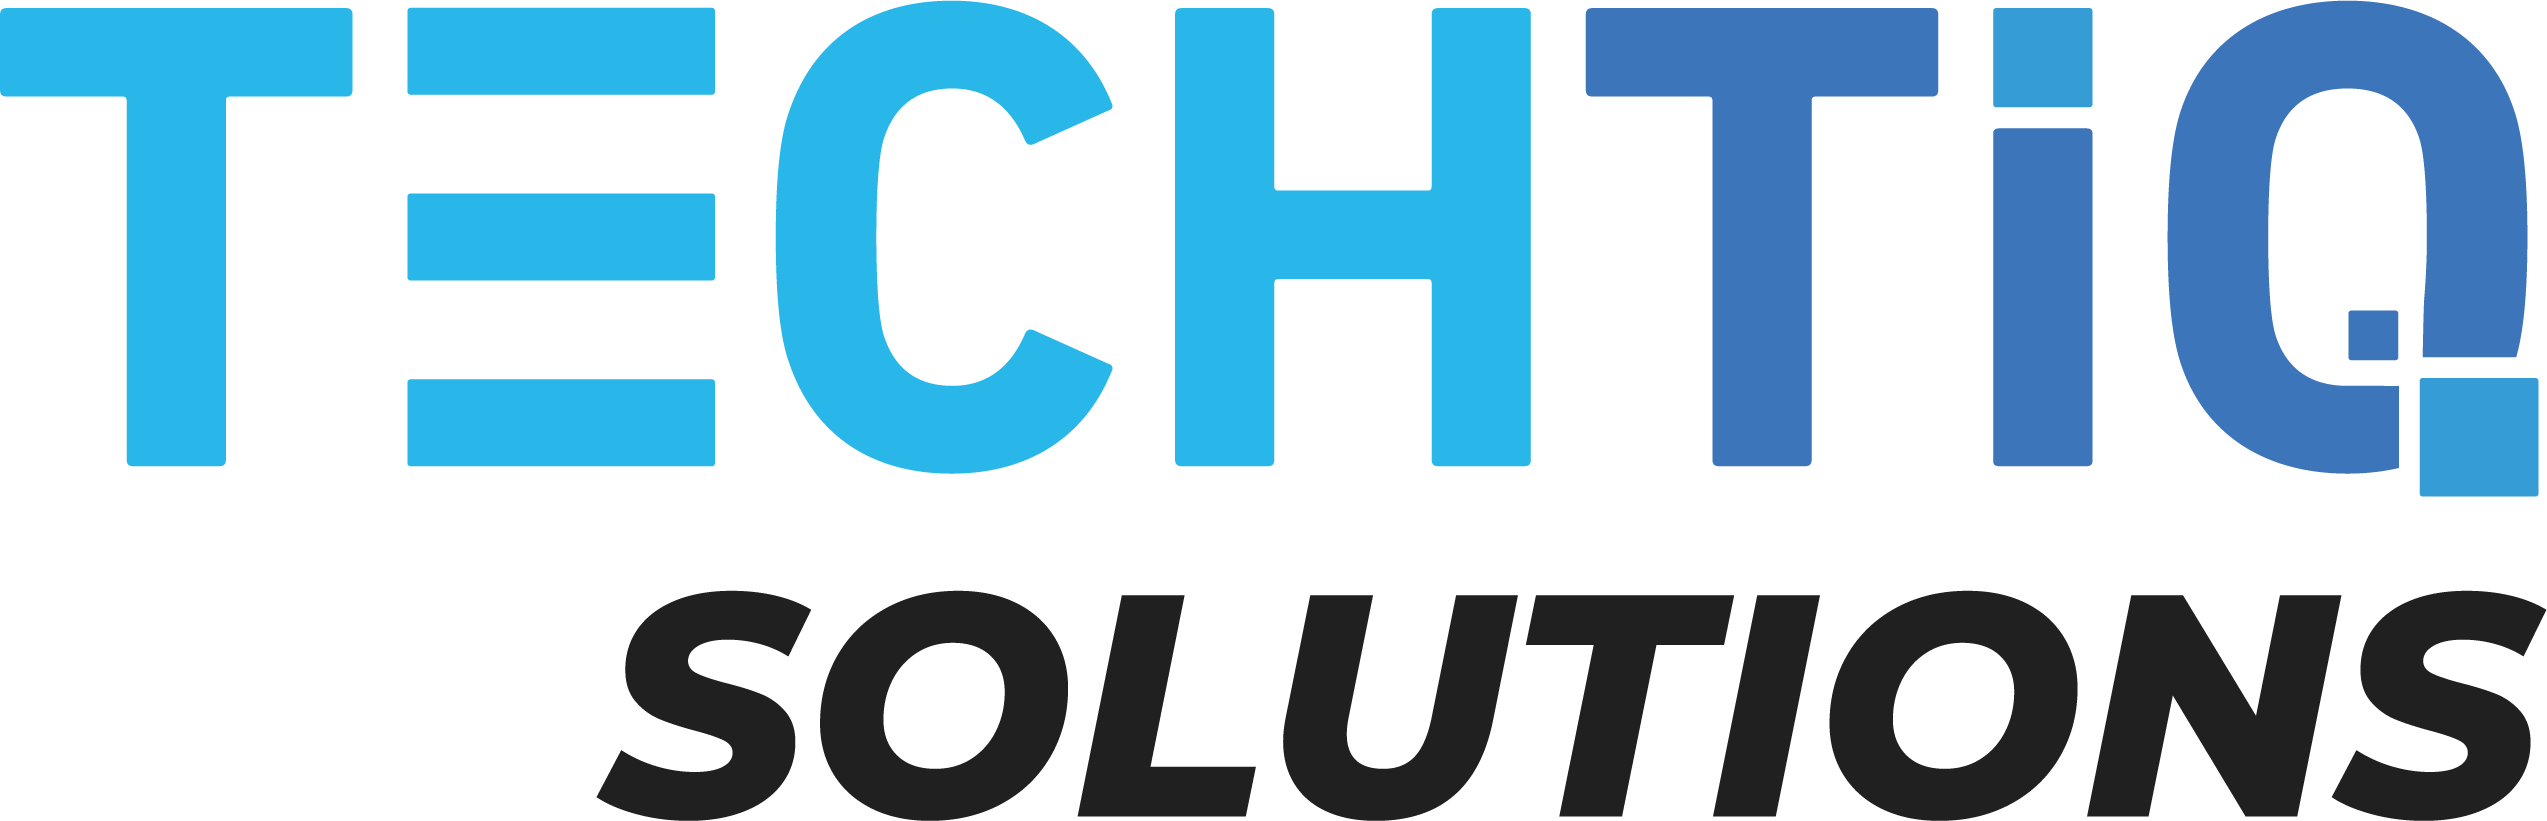 Techtiq Solutions